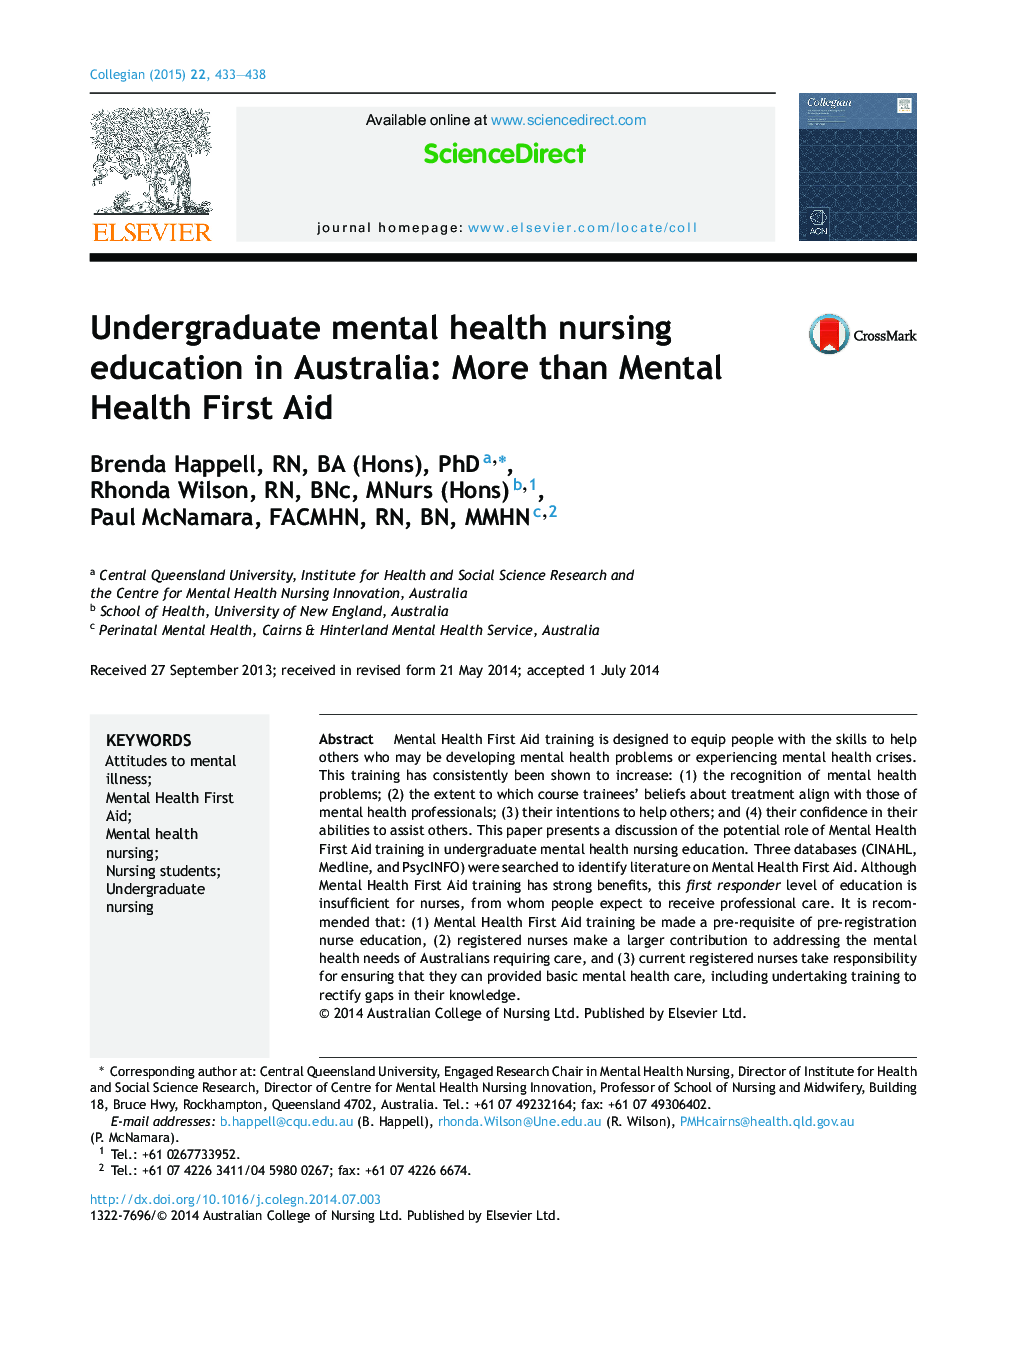 Undergraduate mental health nursing education in Australia: More than Mental Health First Aid